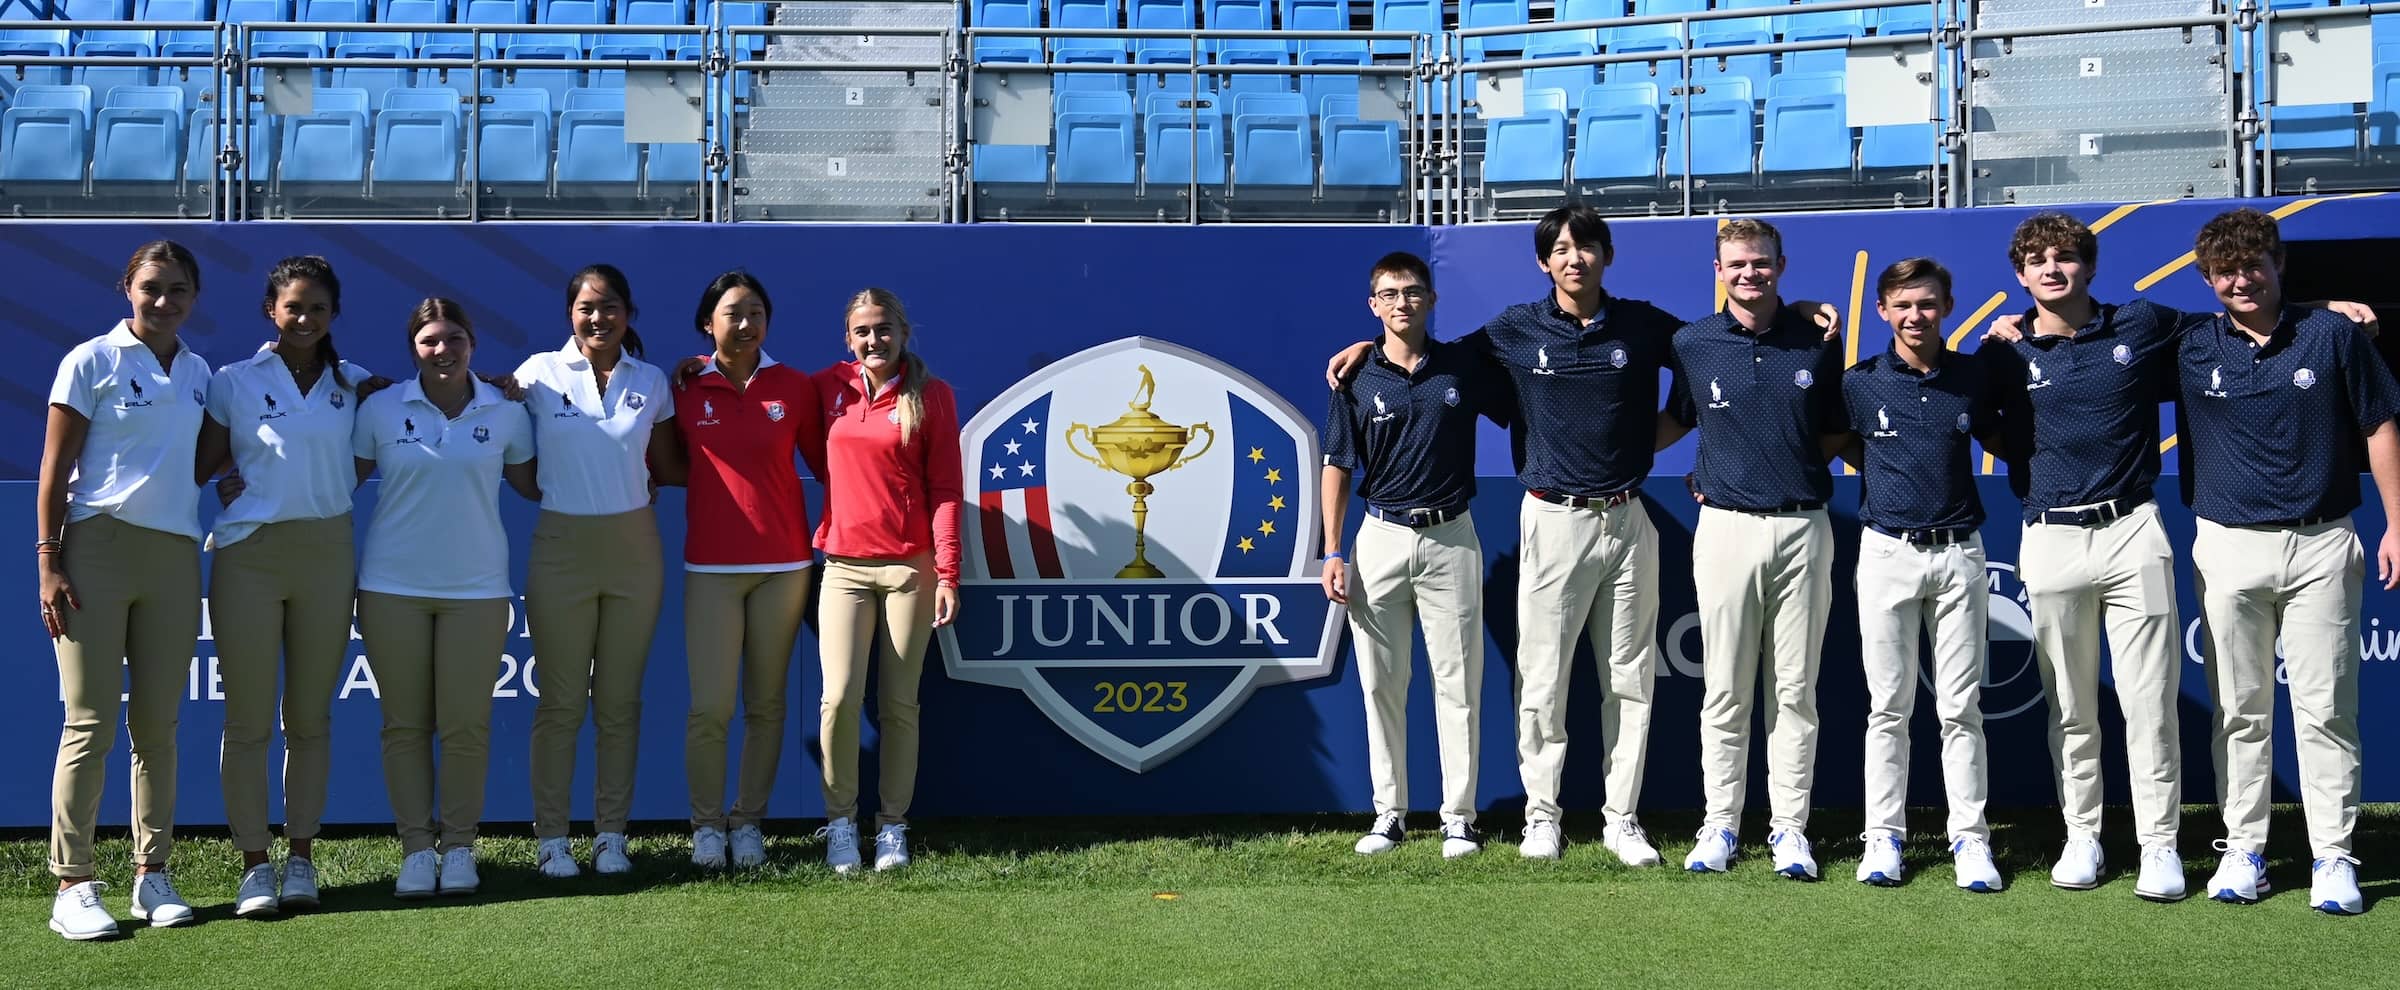 Junior Ryder Cup golfers 2023